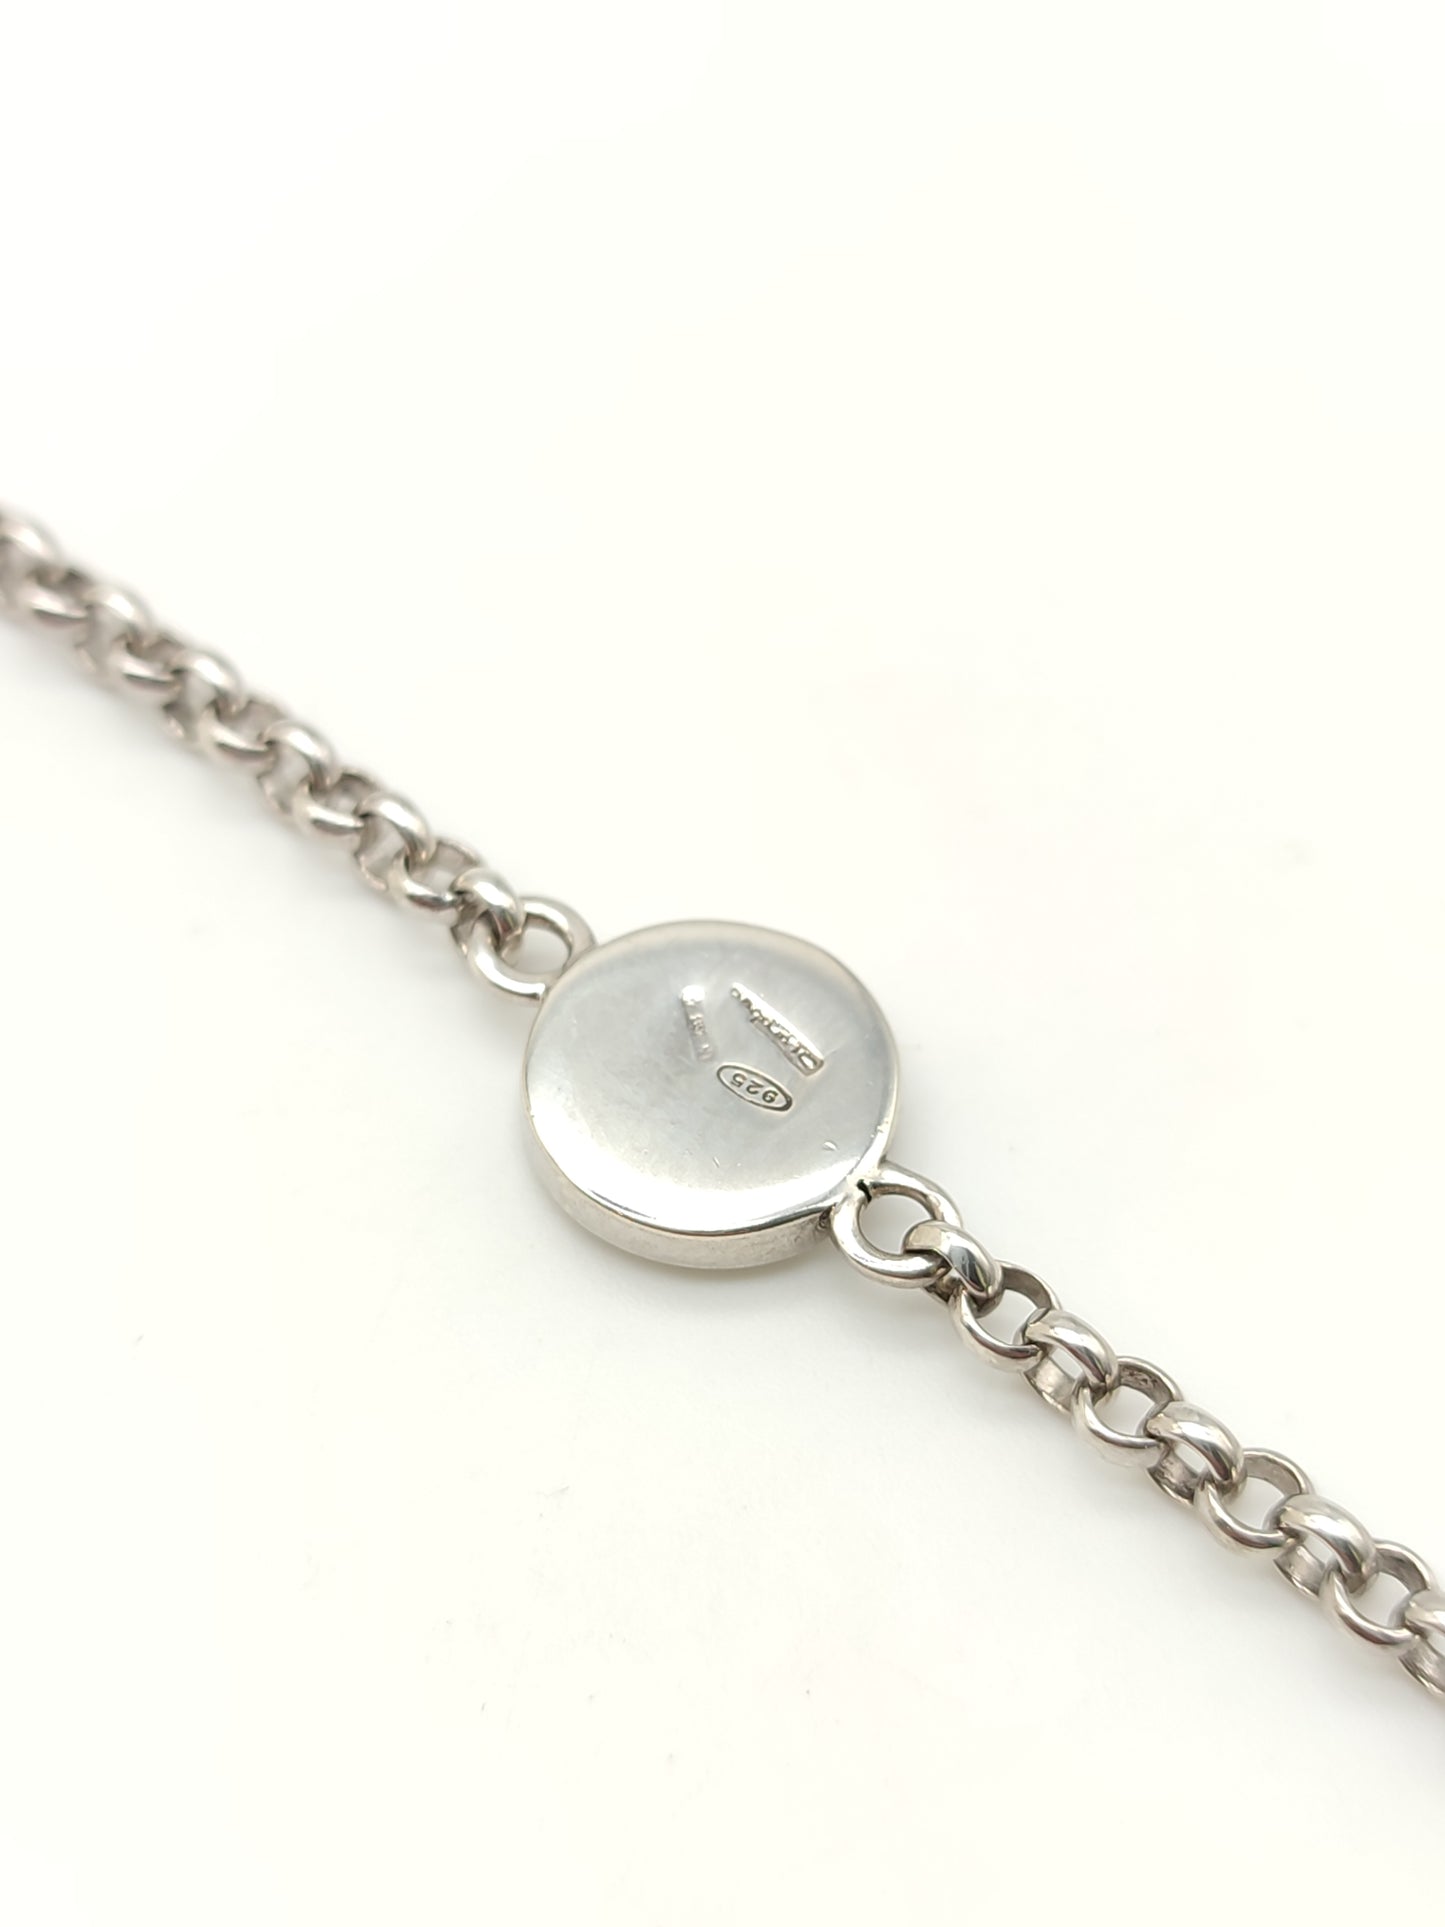 Compass rose silver bracelet with enamel